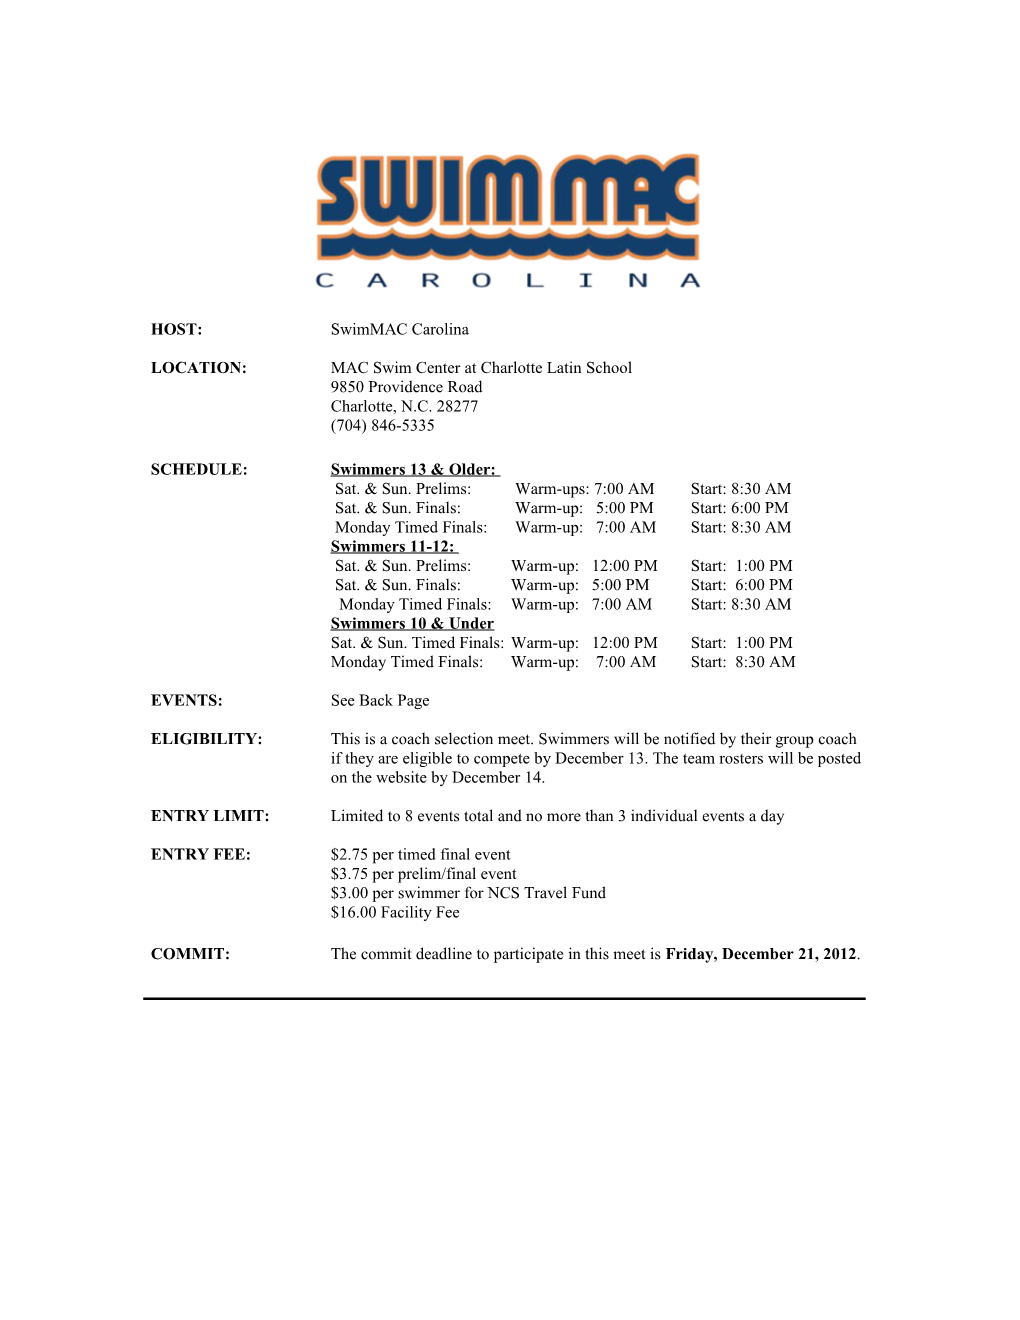 LOCATION: MAC Swim Center at Charlotte Latin School